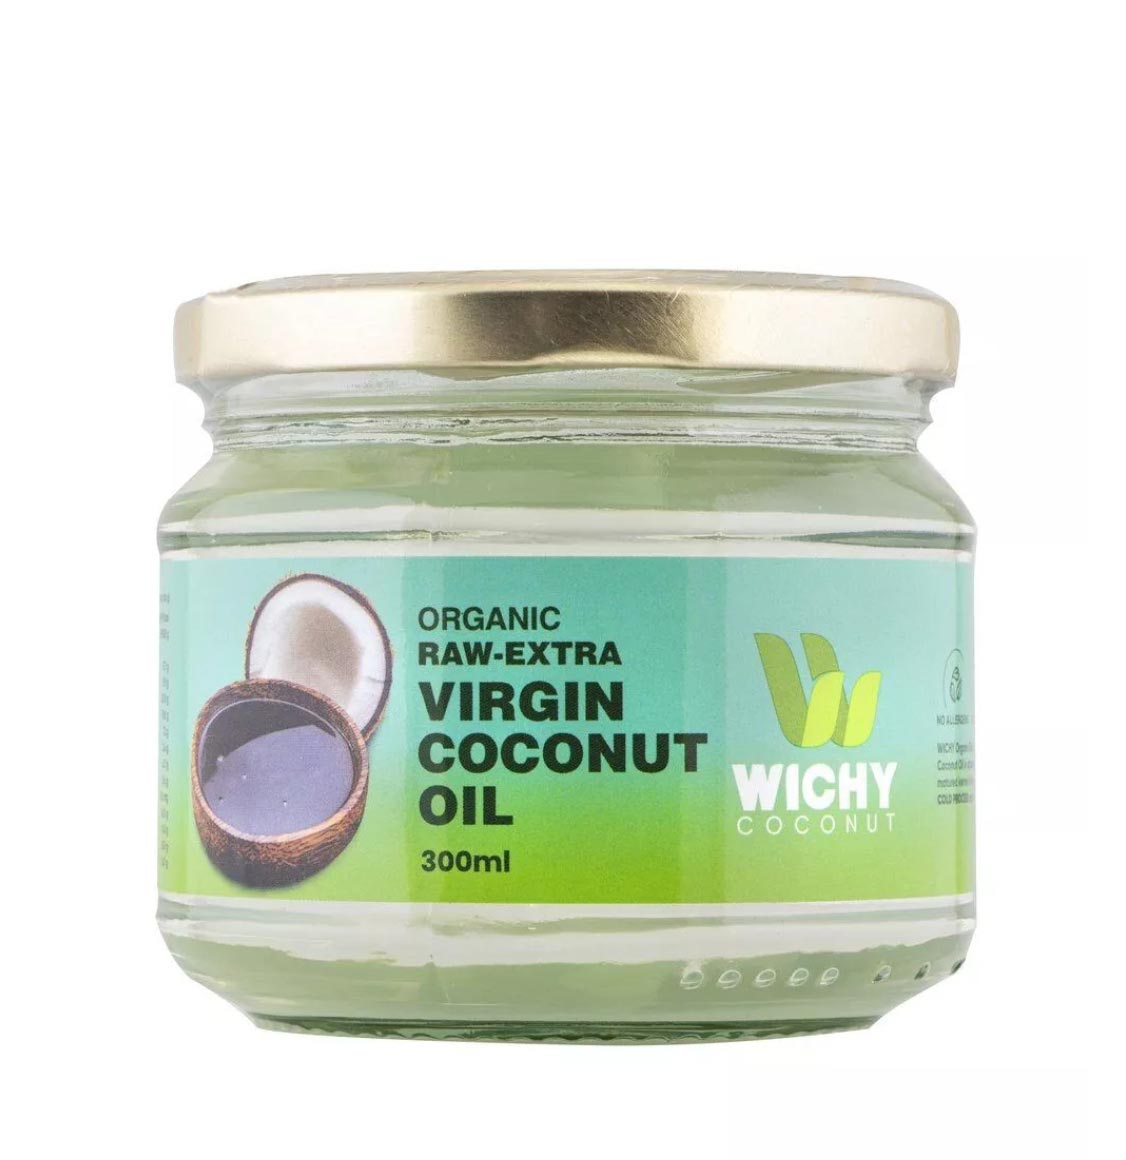 Wichy Coconut Oil Raw Extra Virgin Organic 300ml